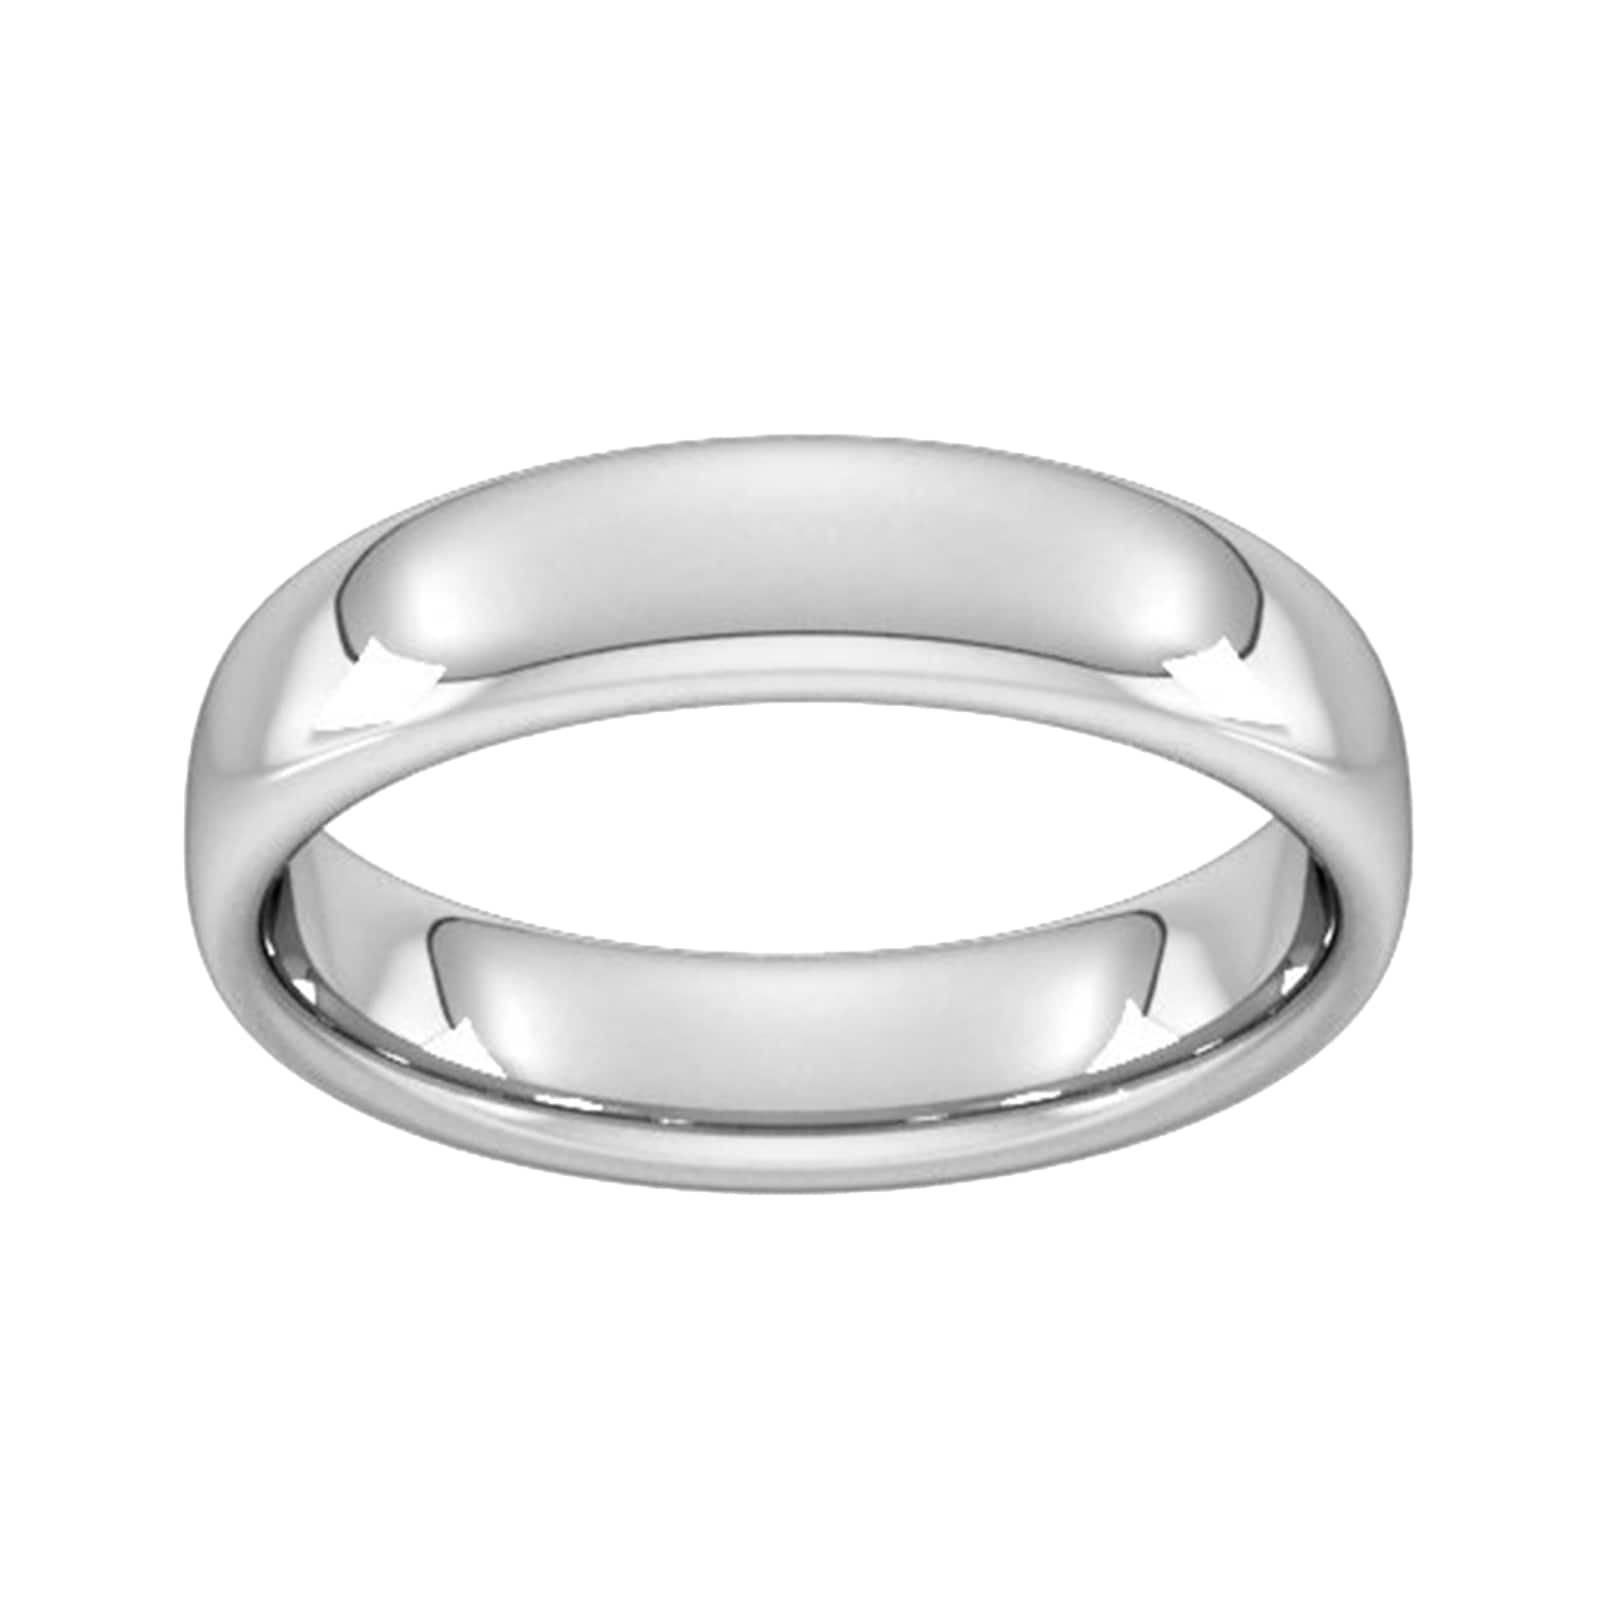 5mm Slight Court Heavy Wedding Ring In 18 Carat White Gold - Ring Size S